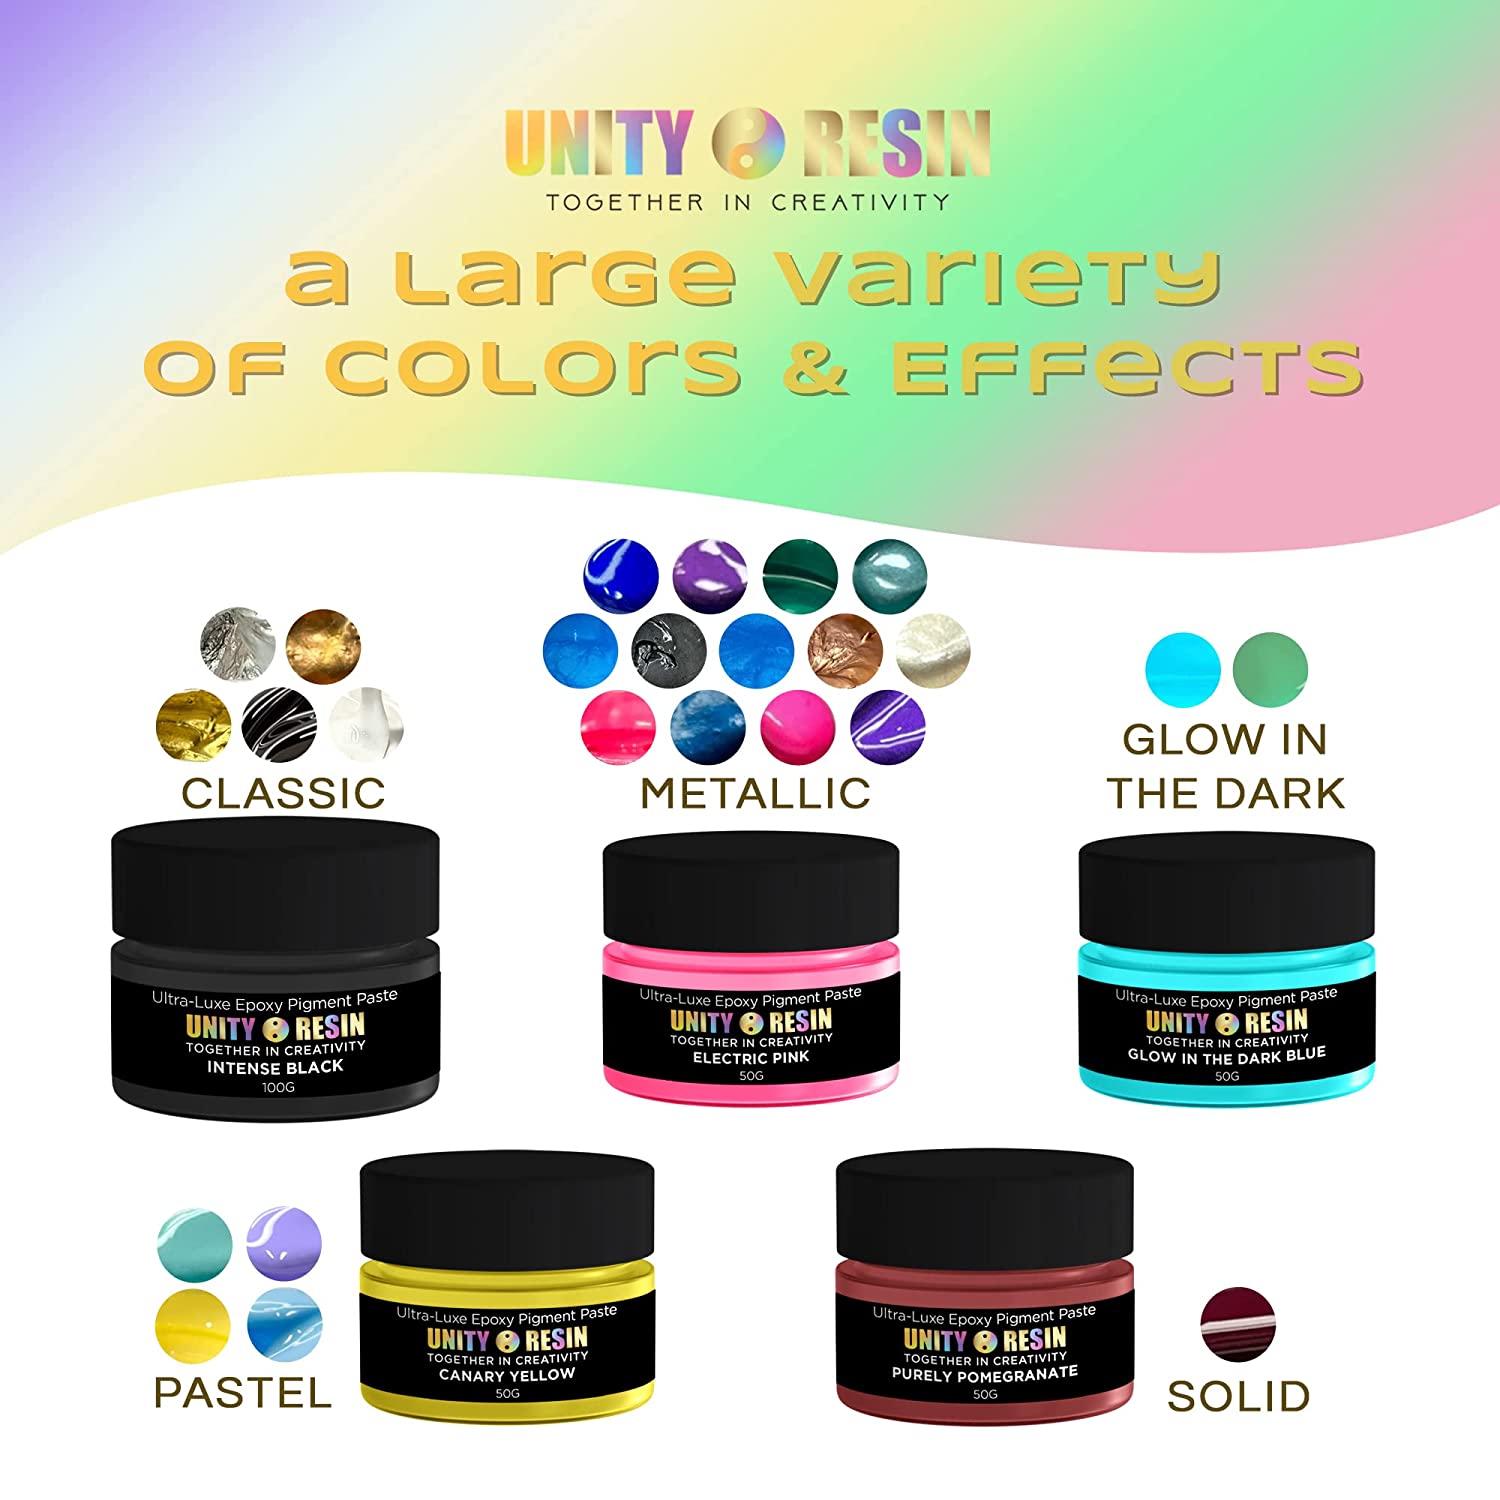 Ultra-Luxe Epoxy Resin Pigment Paste- CARIBBEAN SEA (50G).